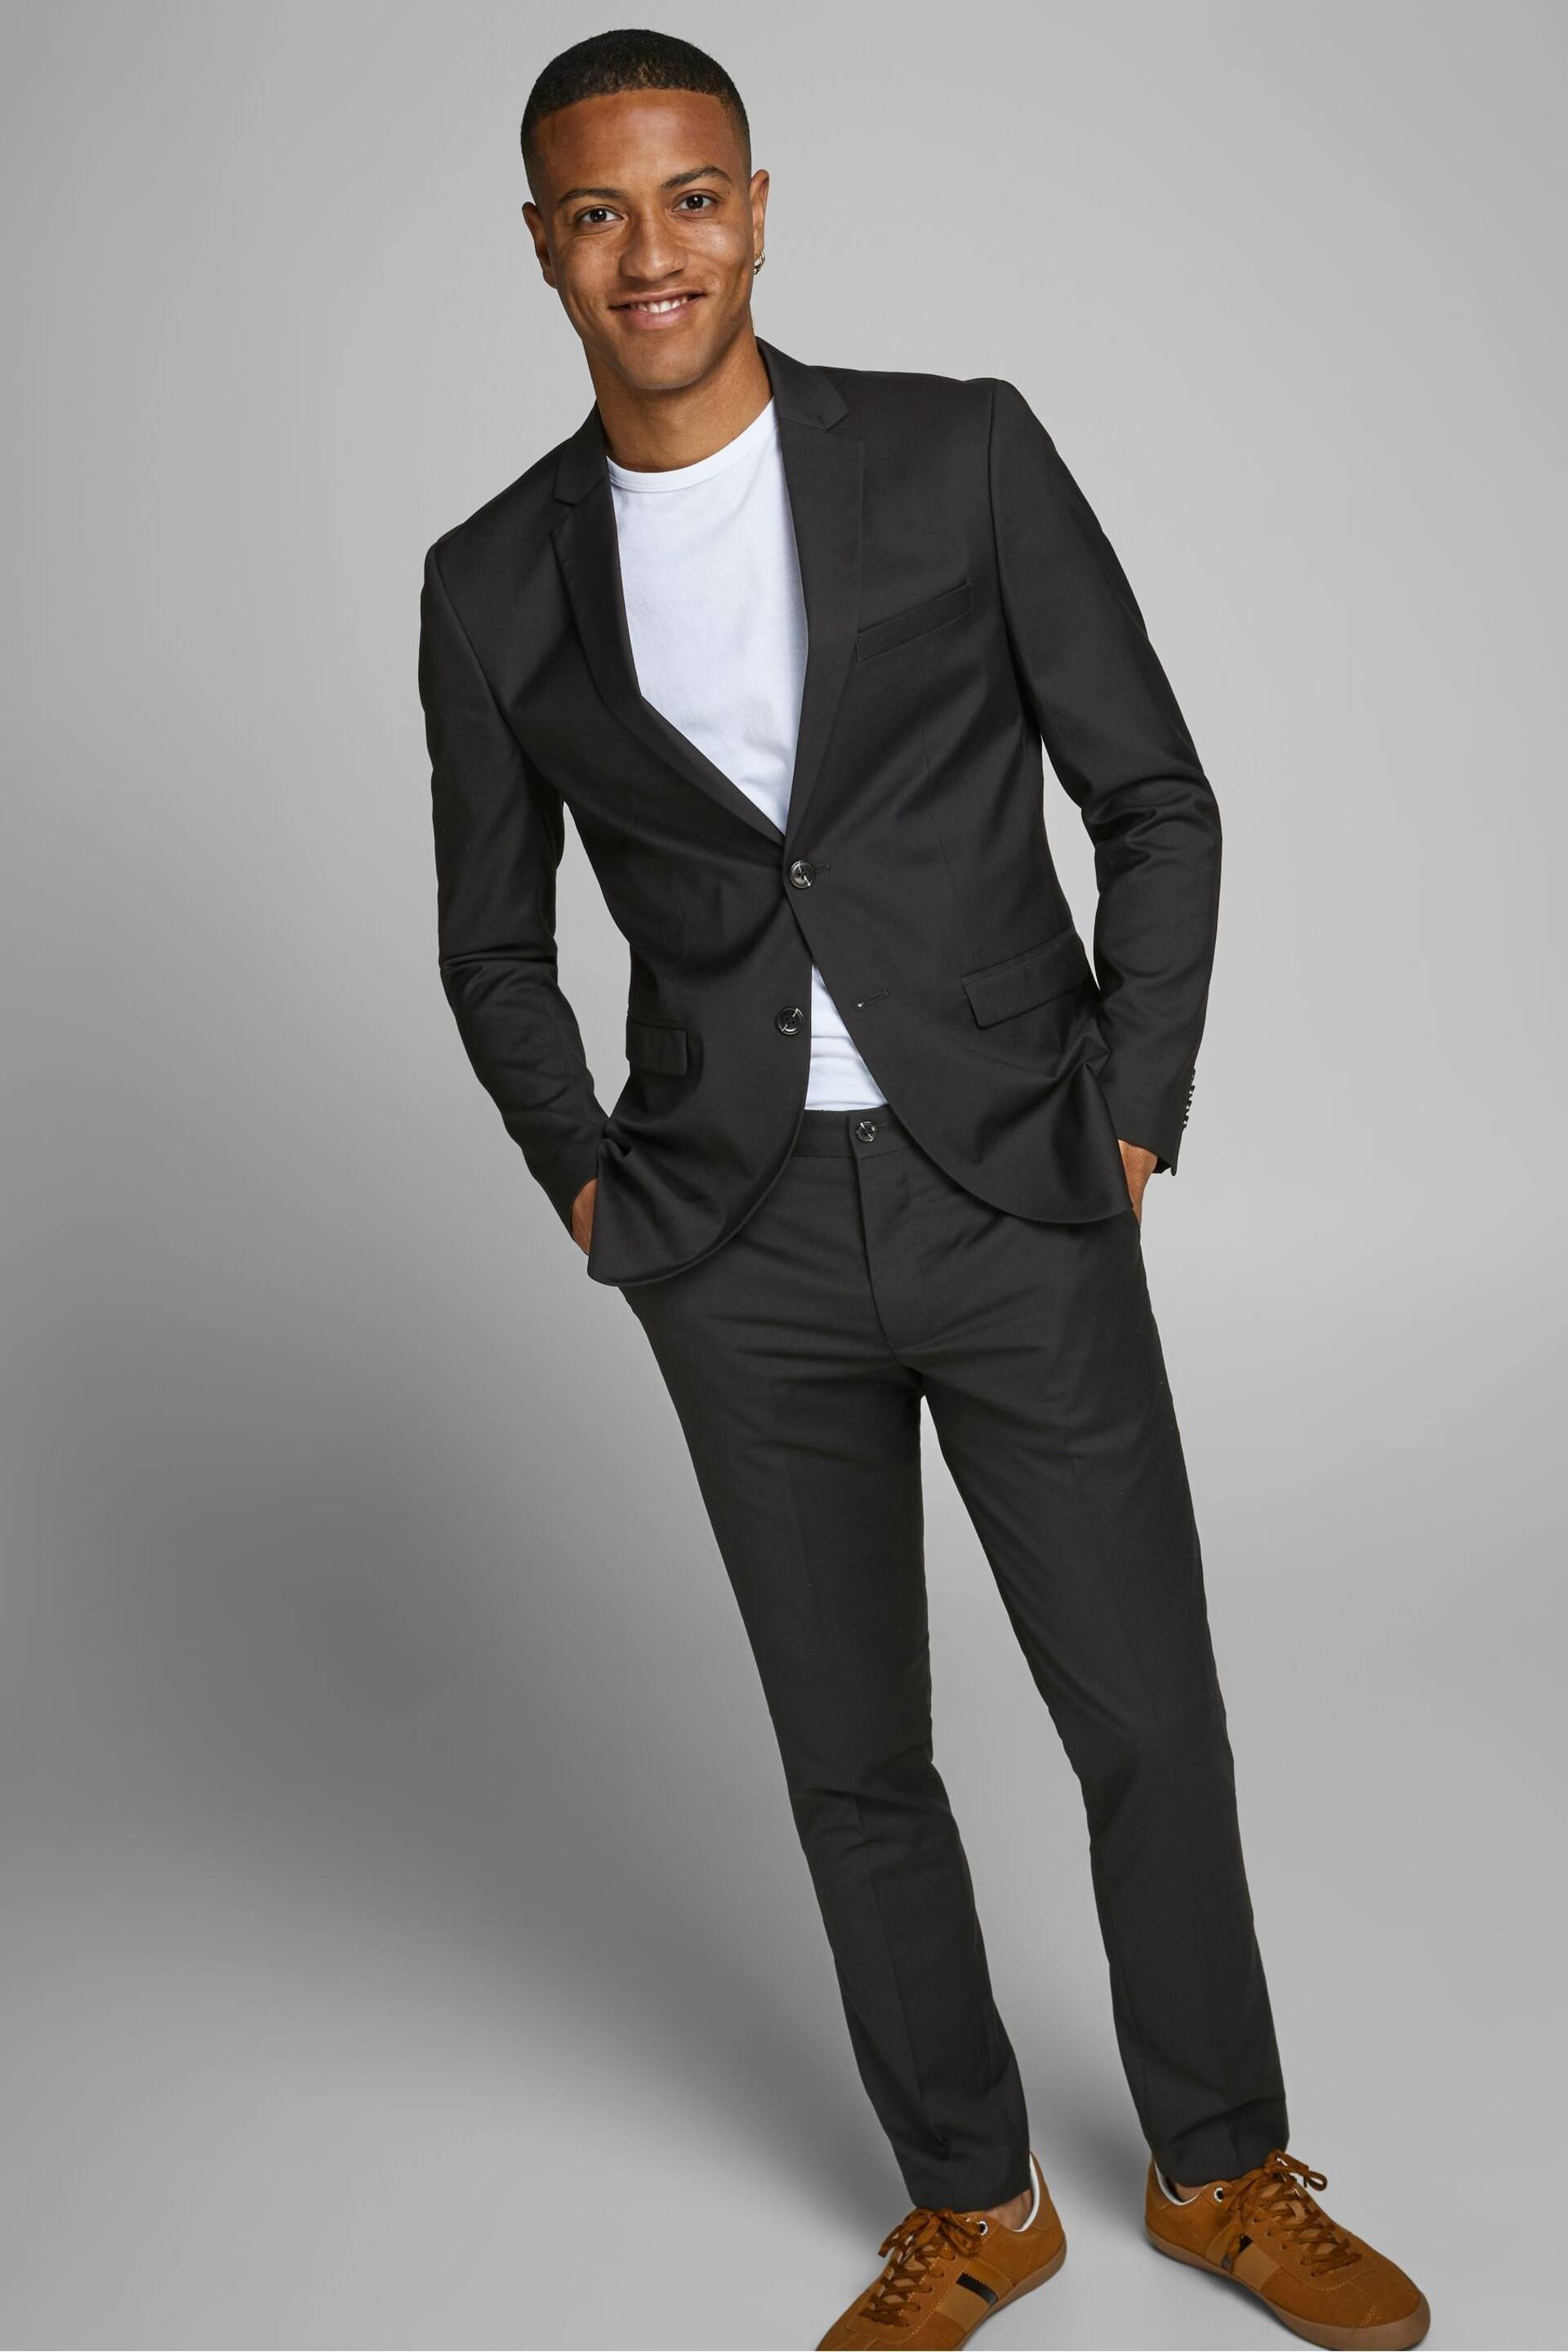 JACK & JONES Black Slim Fit One Button Suit Blazer - Image 2 of 4